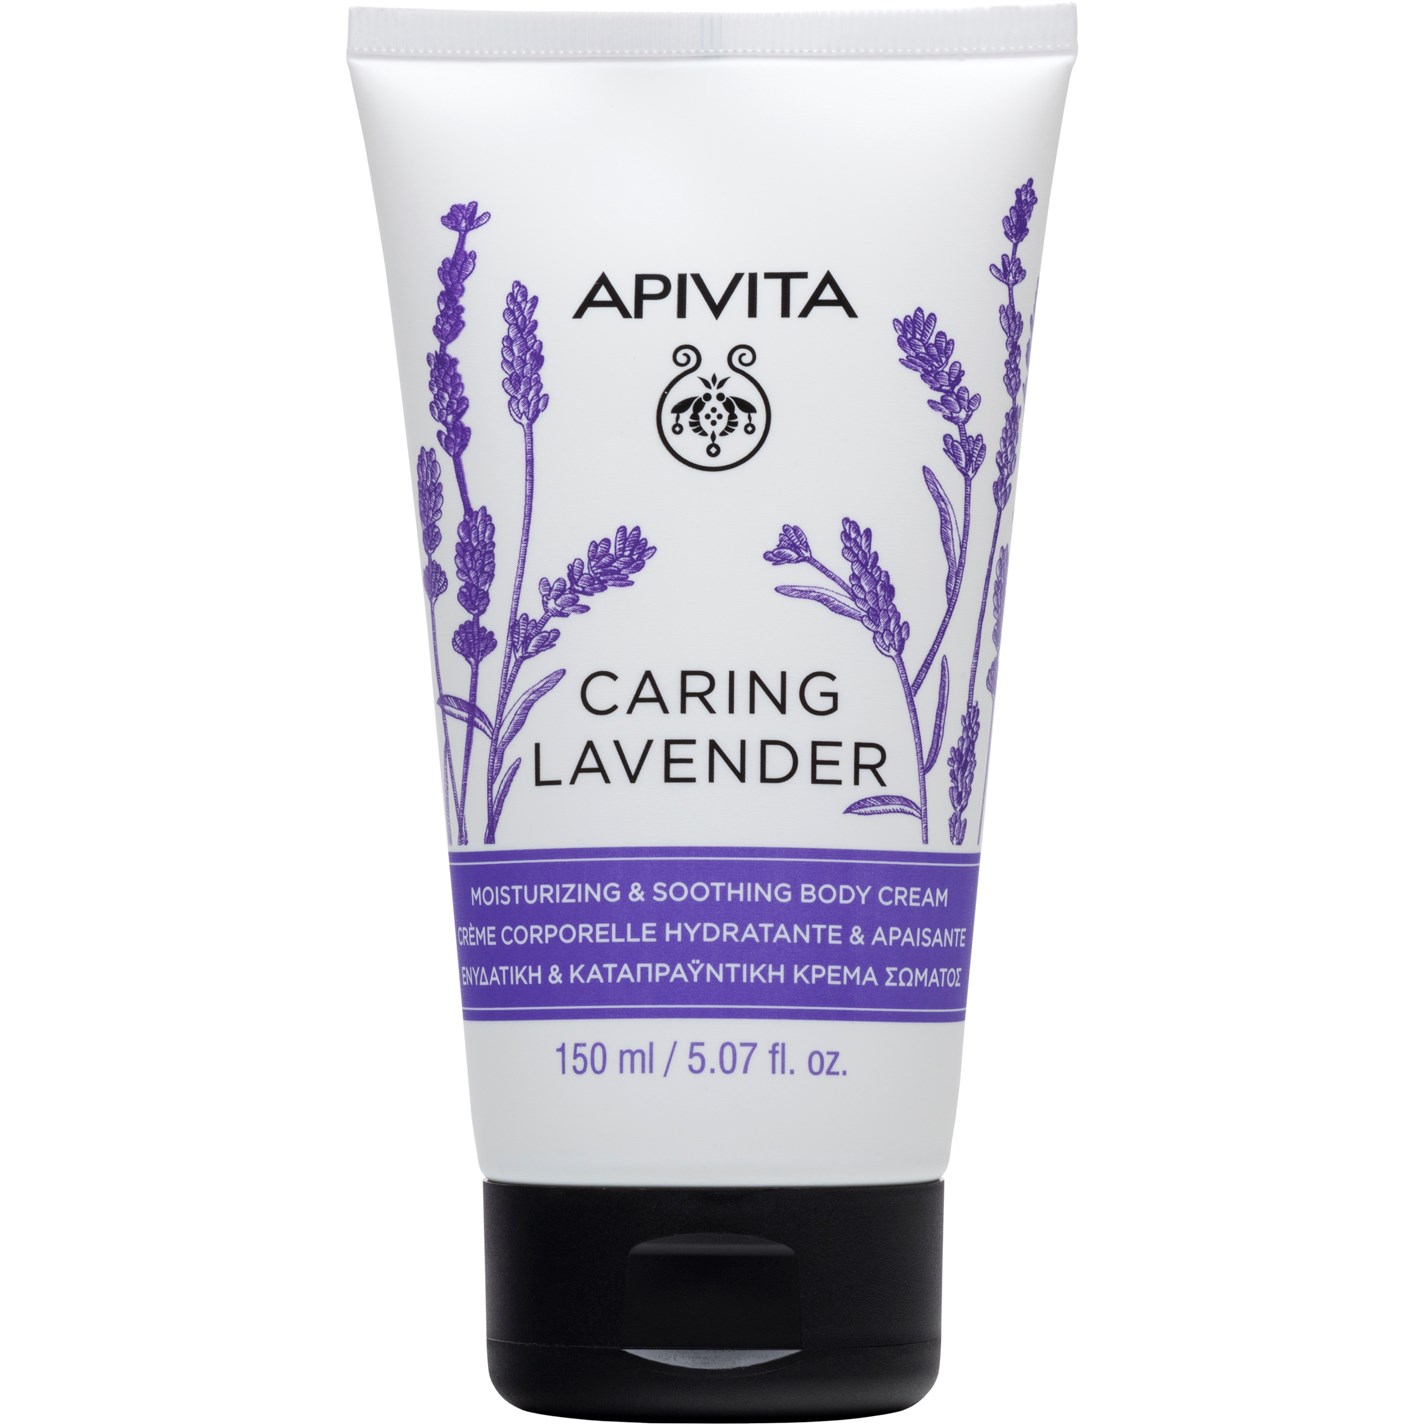 Bilde av Apivita Caring Lavender Moisturizing & Soothing Body Cream With Laven